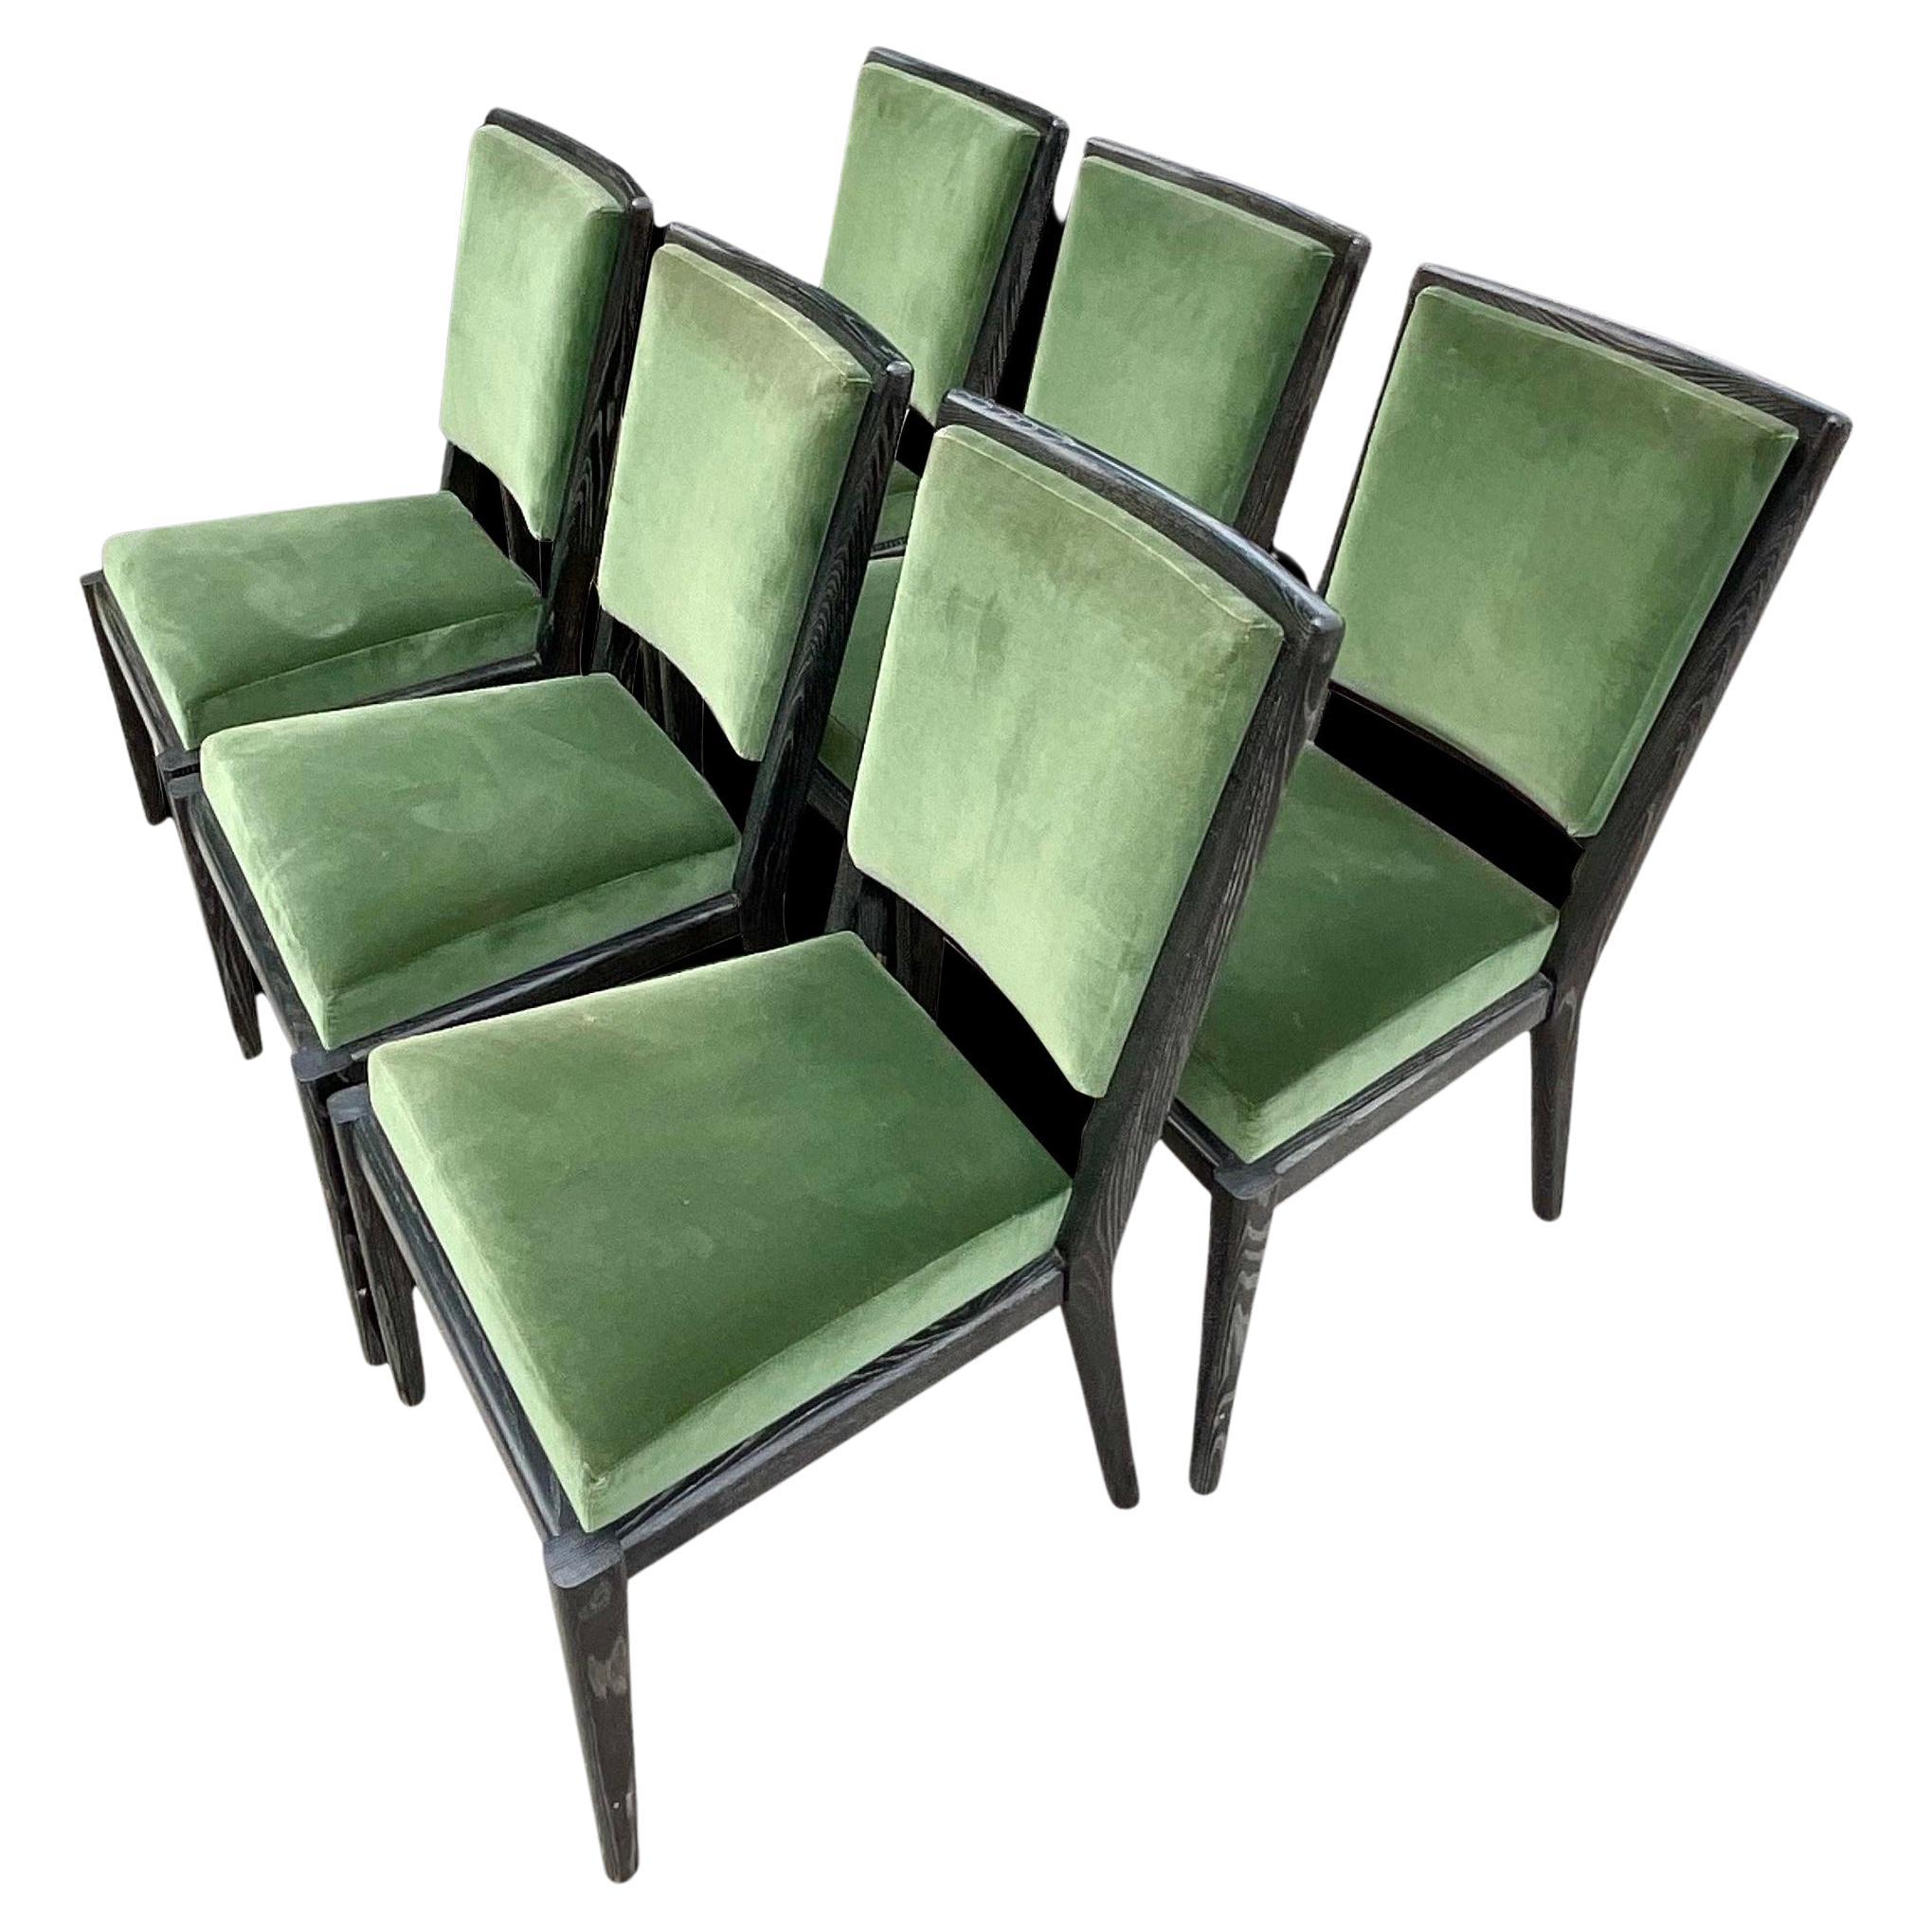 Vintage Contemporary David Iatesta Ash Wood “Avenue” Dining Chairs, Set of 6